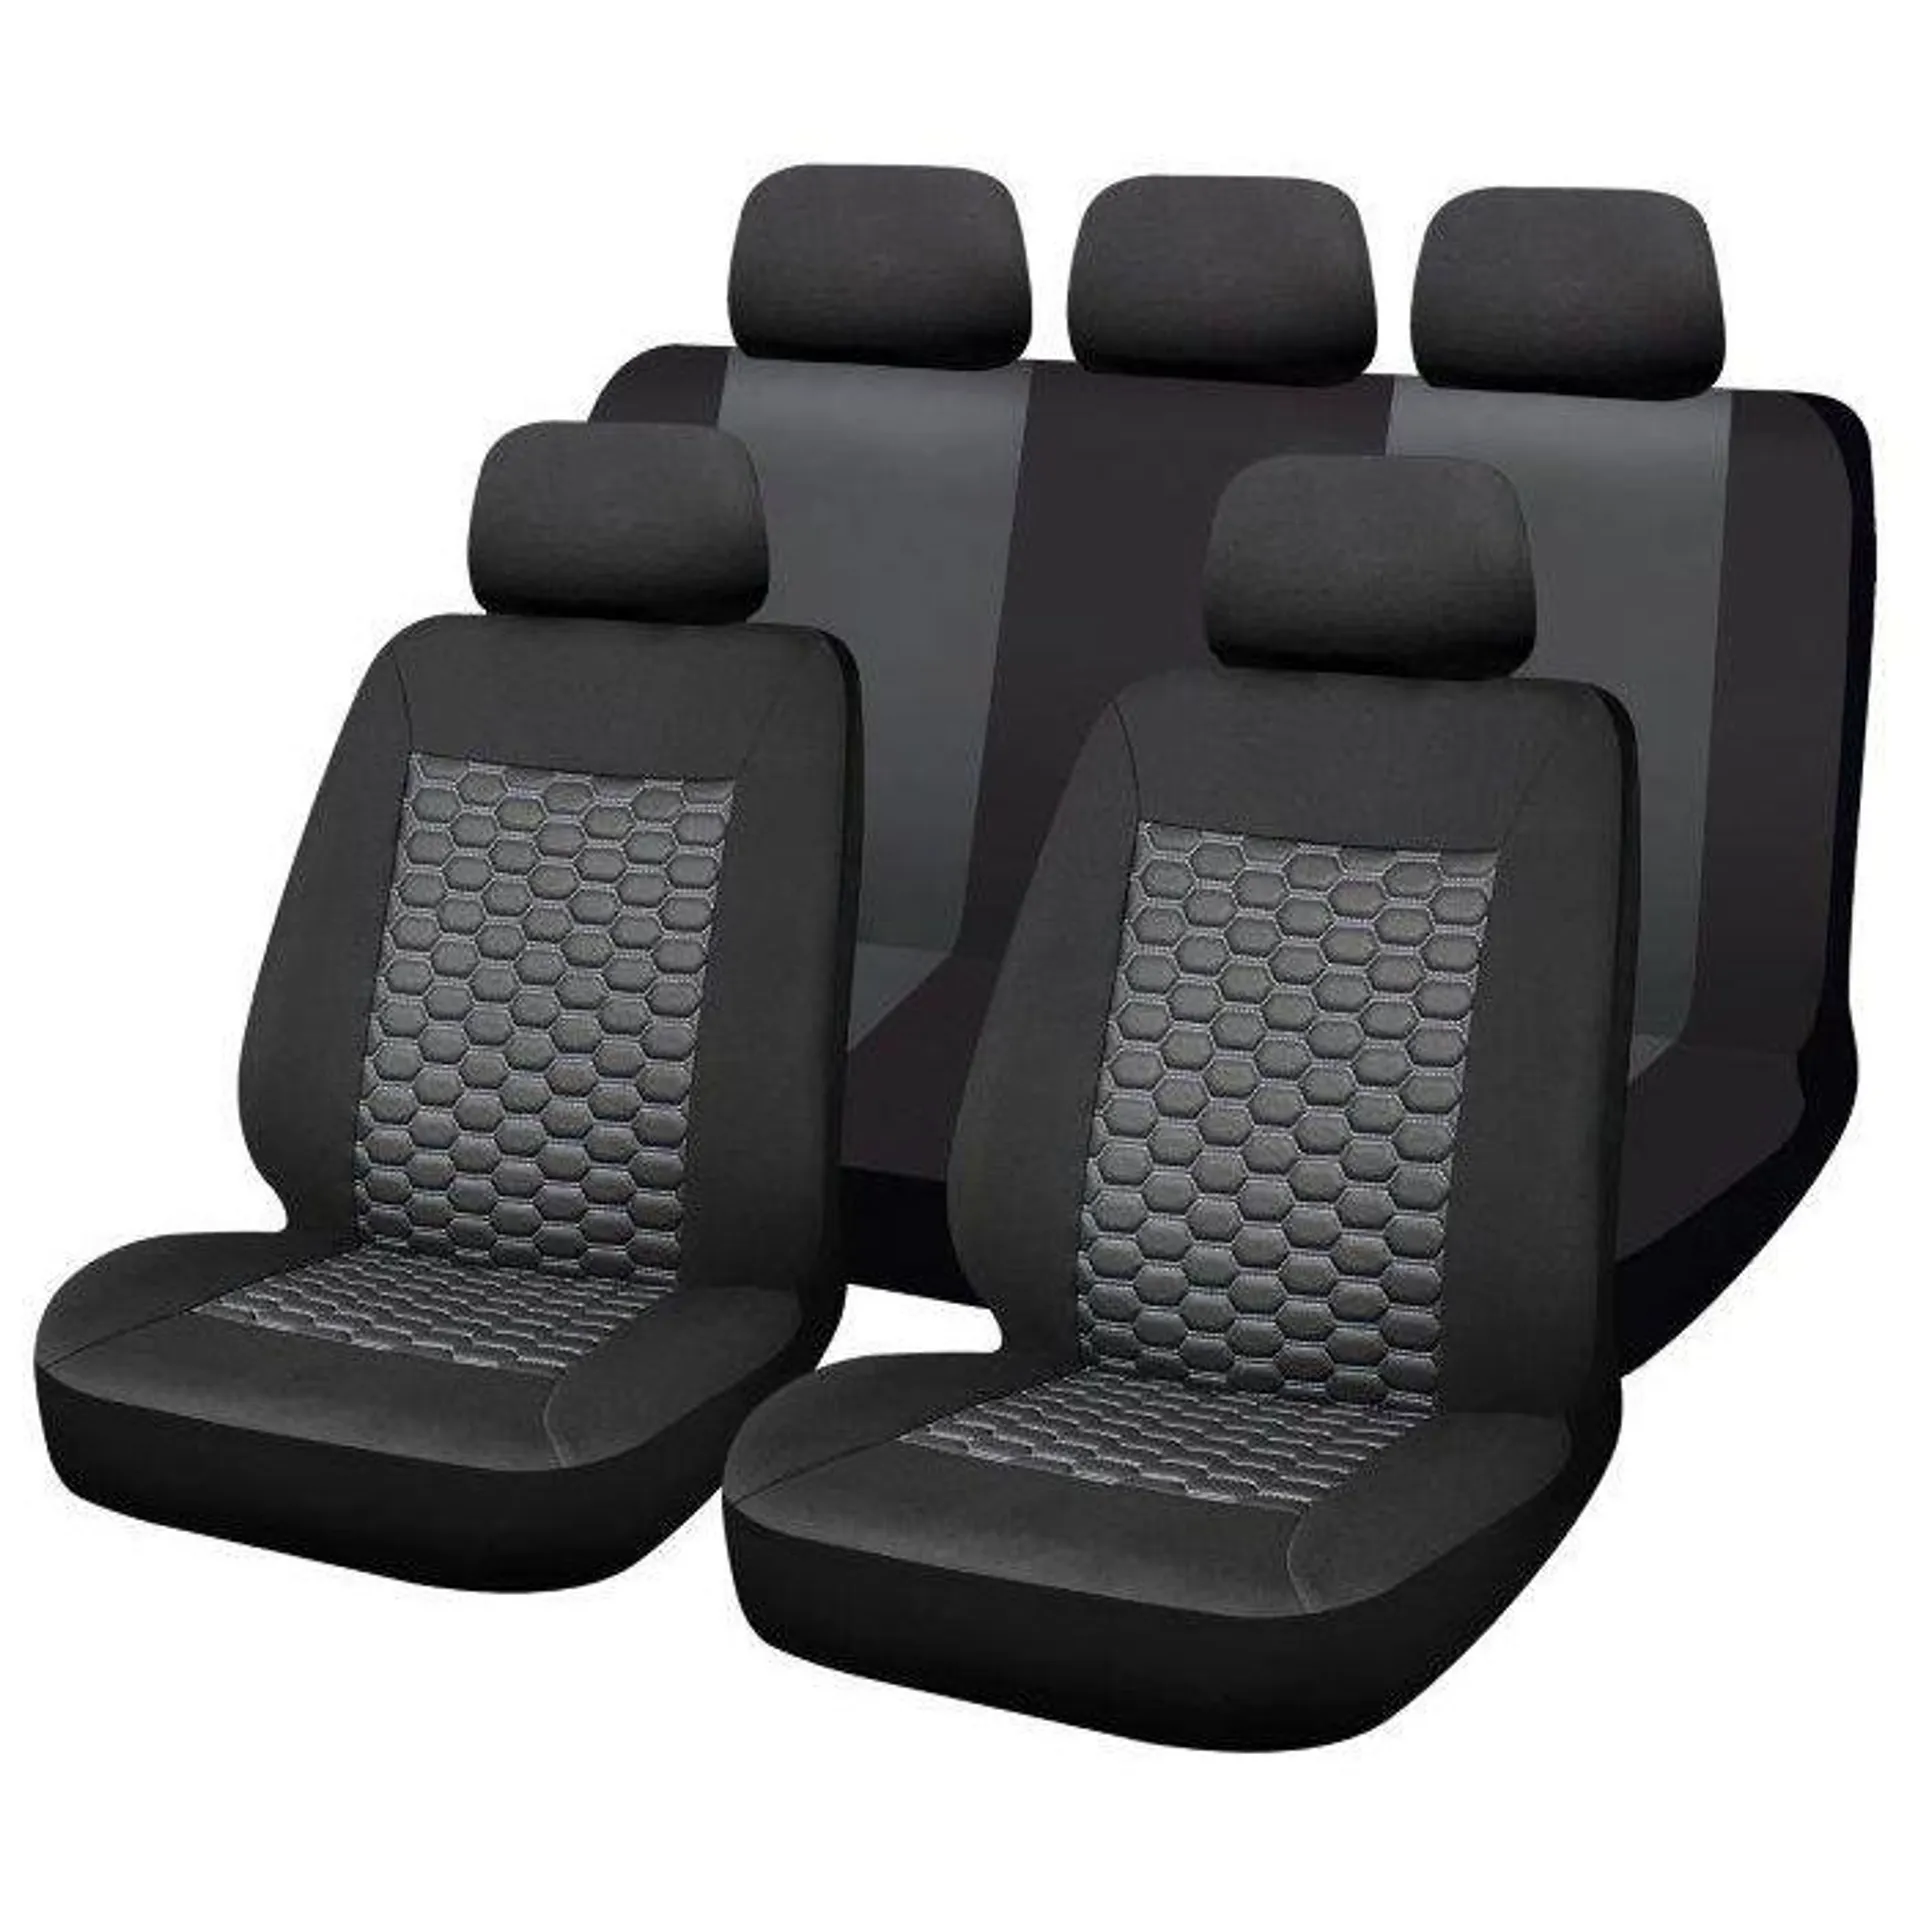 Autogear 11 Piece Monsanto Seat Cover Set Black/Grey